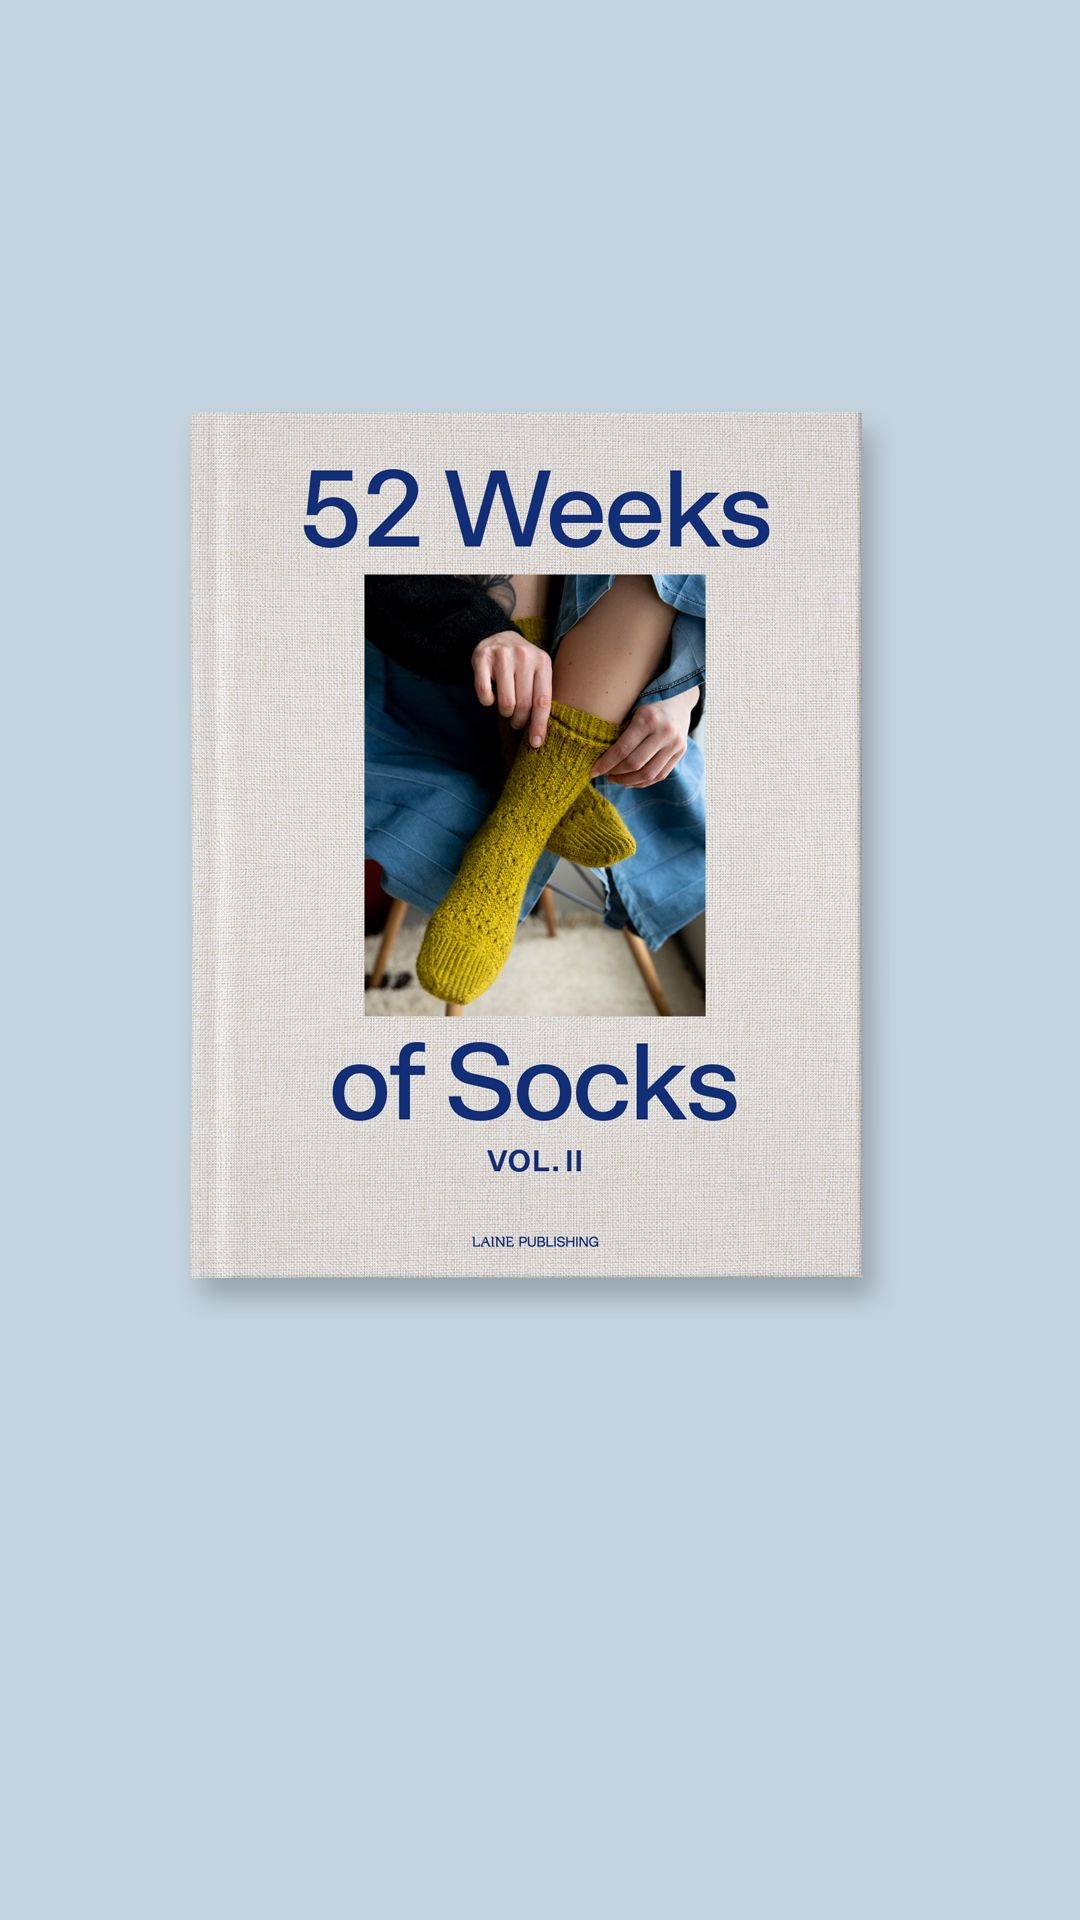 52 Weeks of Socks  Week 01: Intersections – Classic Bhaer